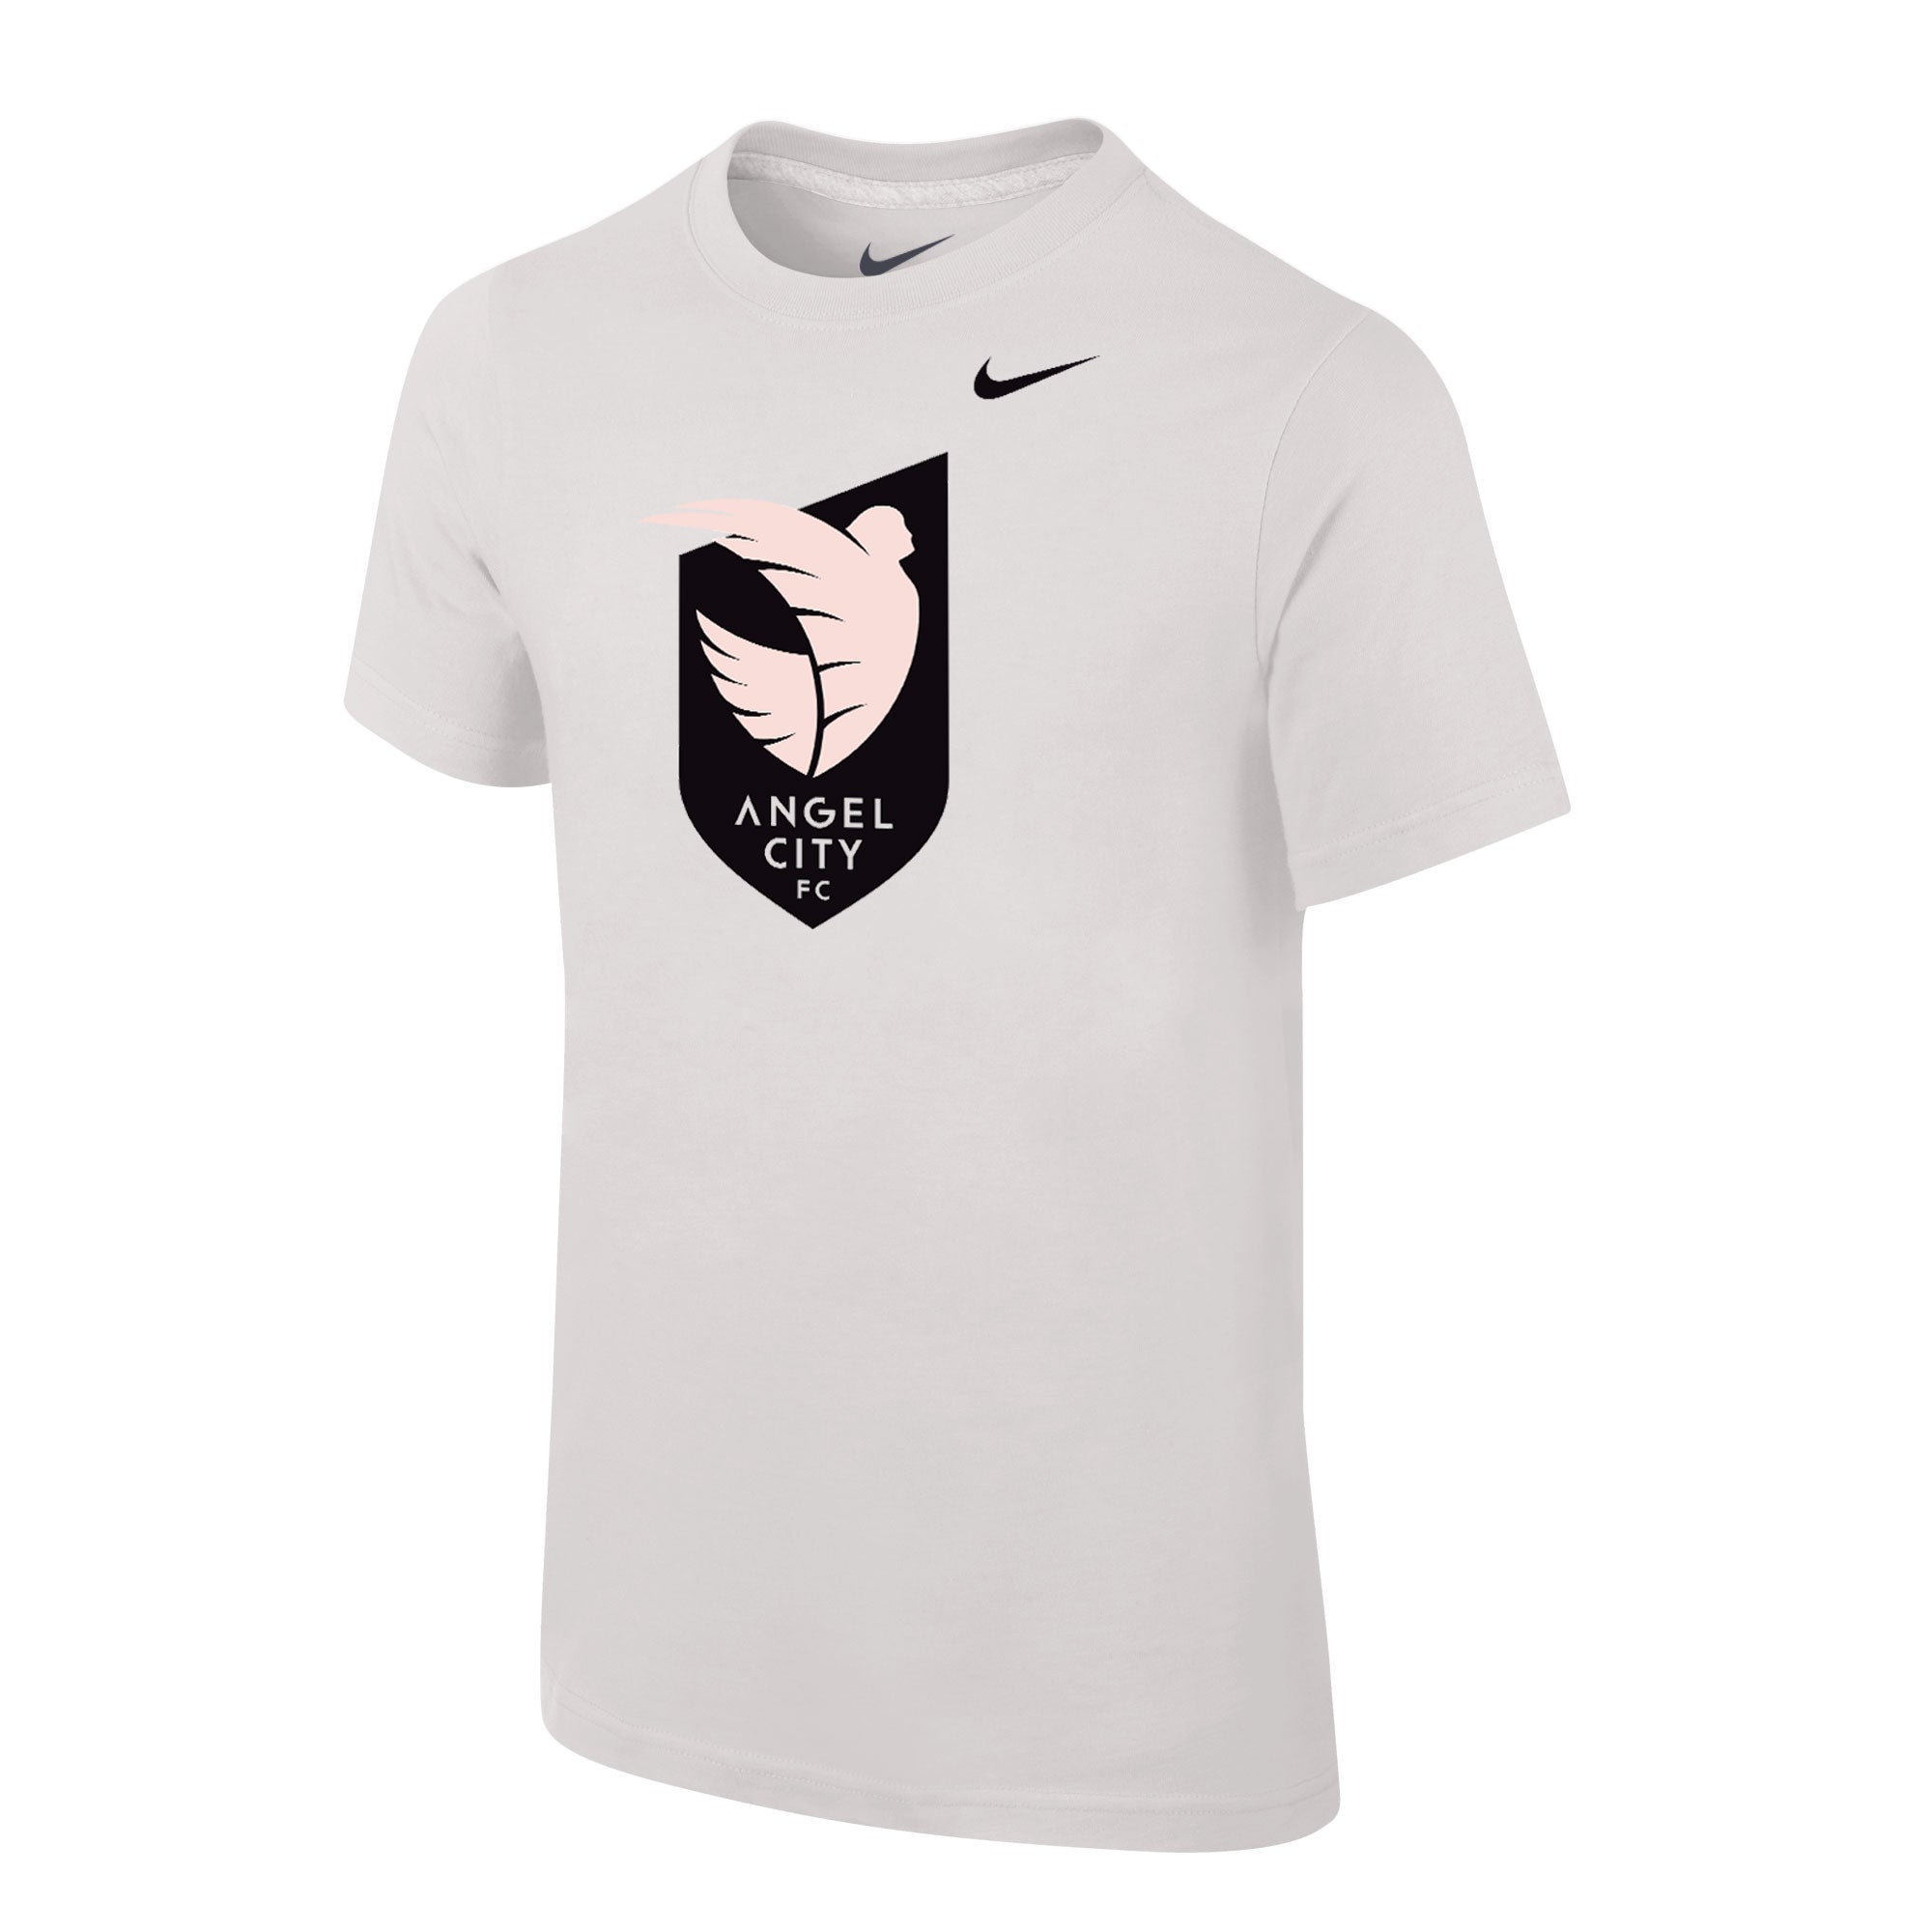 Angel City FC Nike Sol Rosa Crest camiseta blanca de manga corta para jóvenes